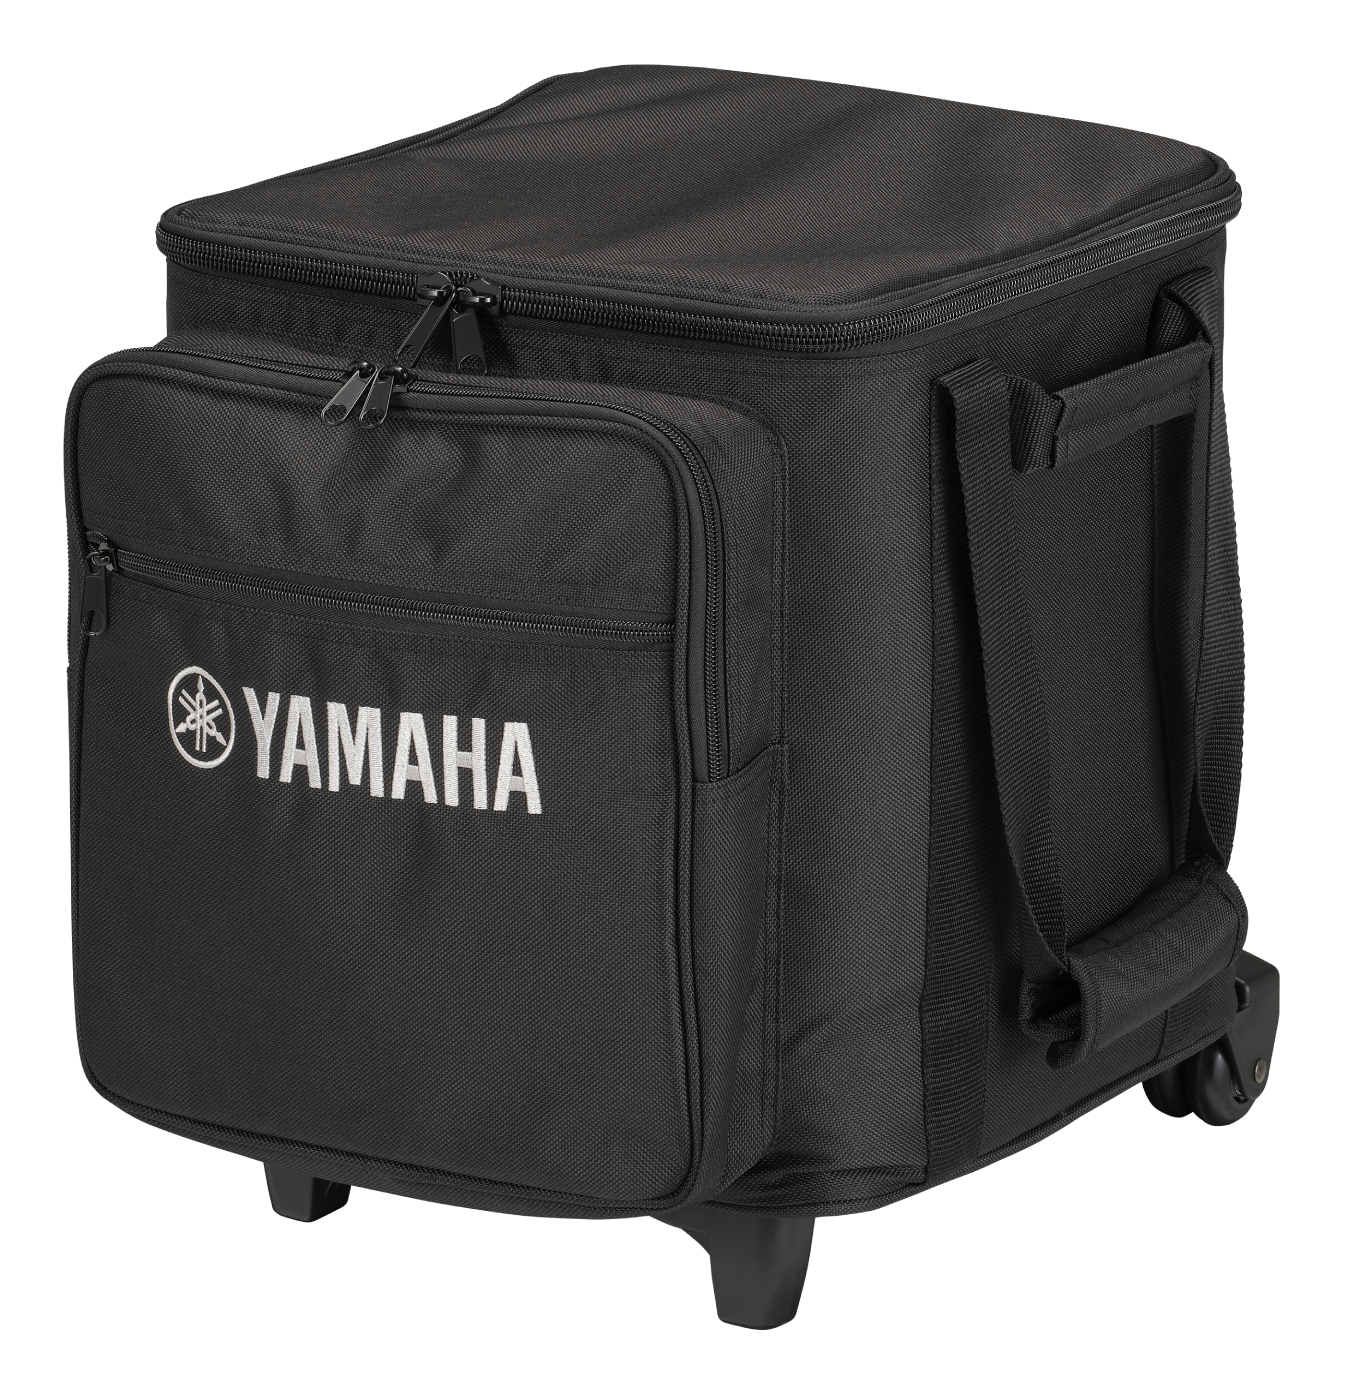 Yamaha Stagepas 200 Btr (avec Batterie)  + Valise Pour Stagepas 200 - Pack sonorización - Variation 2